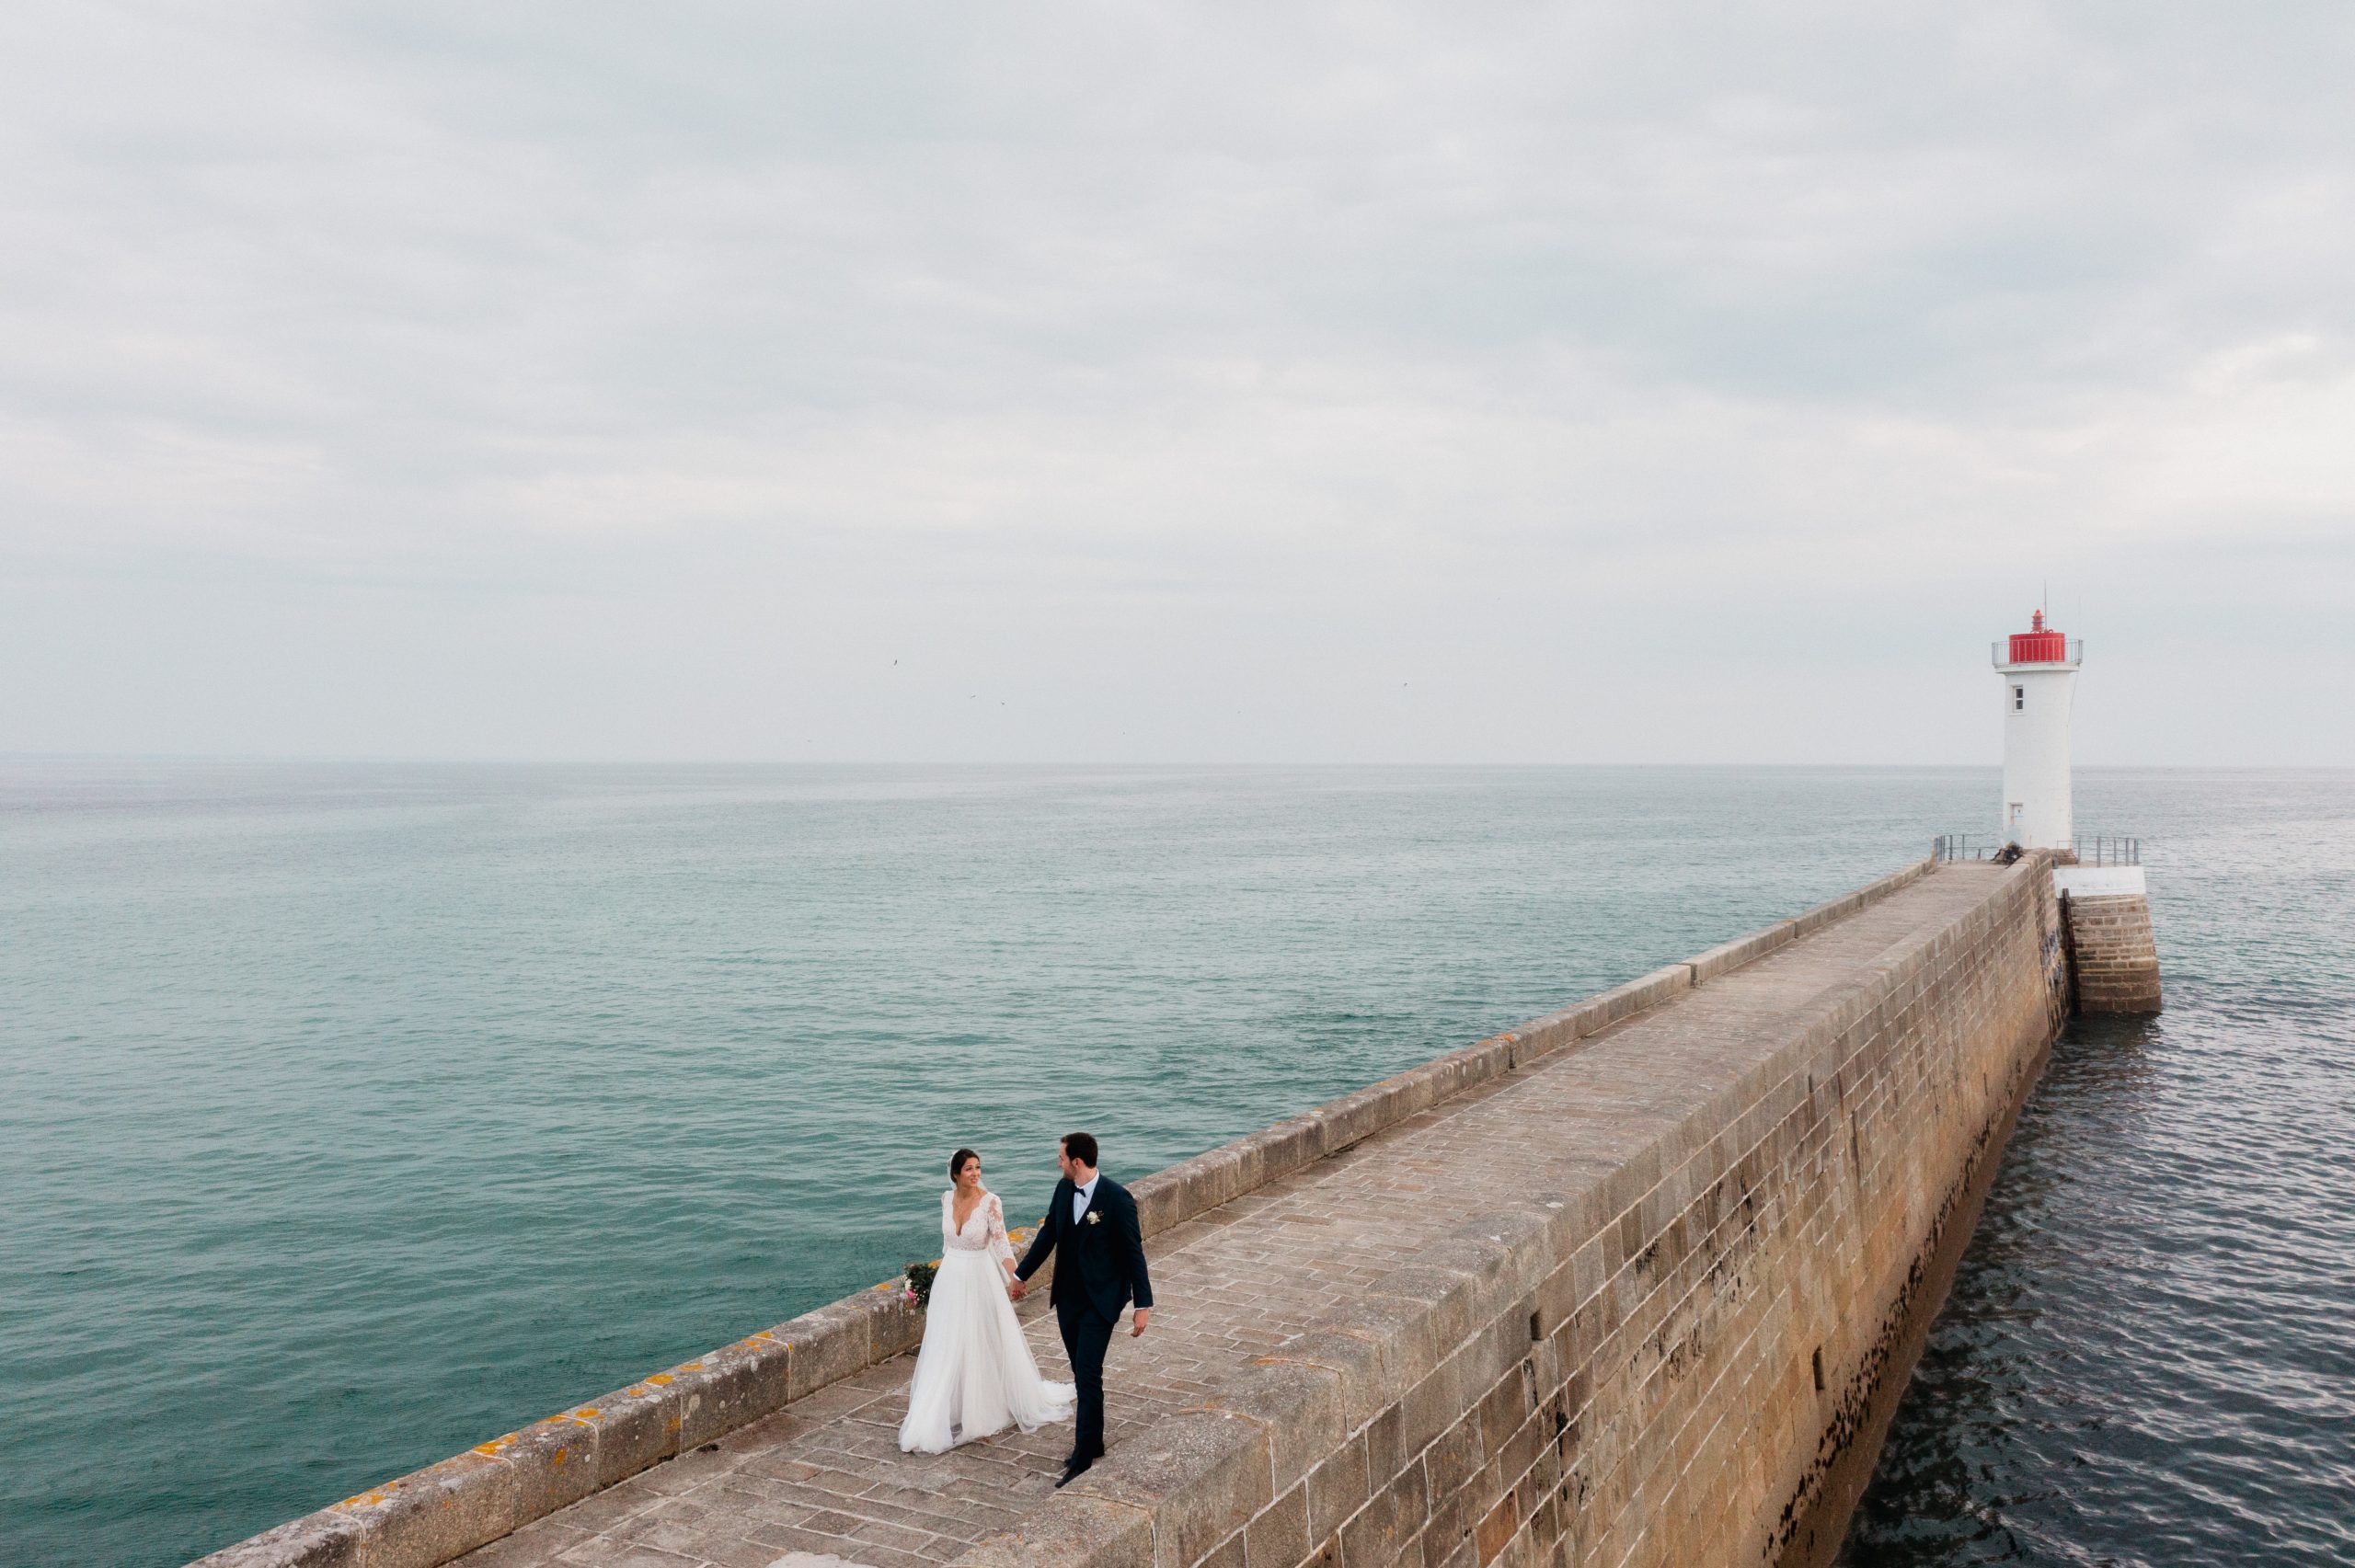 Mariage en Bretagne au bord de la mer